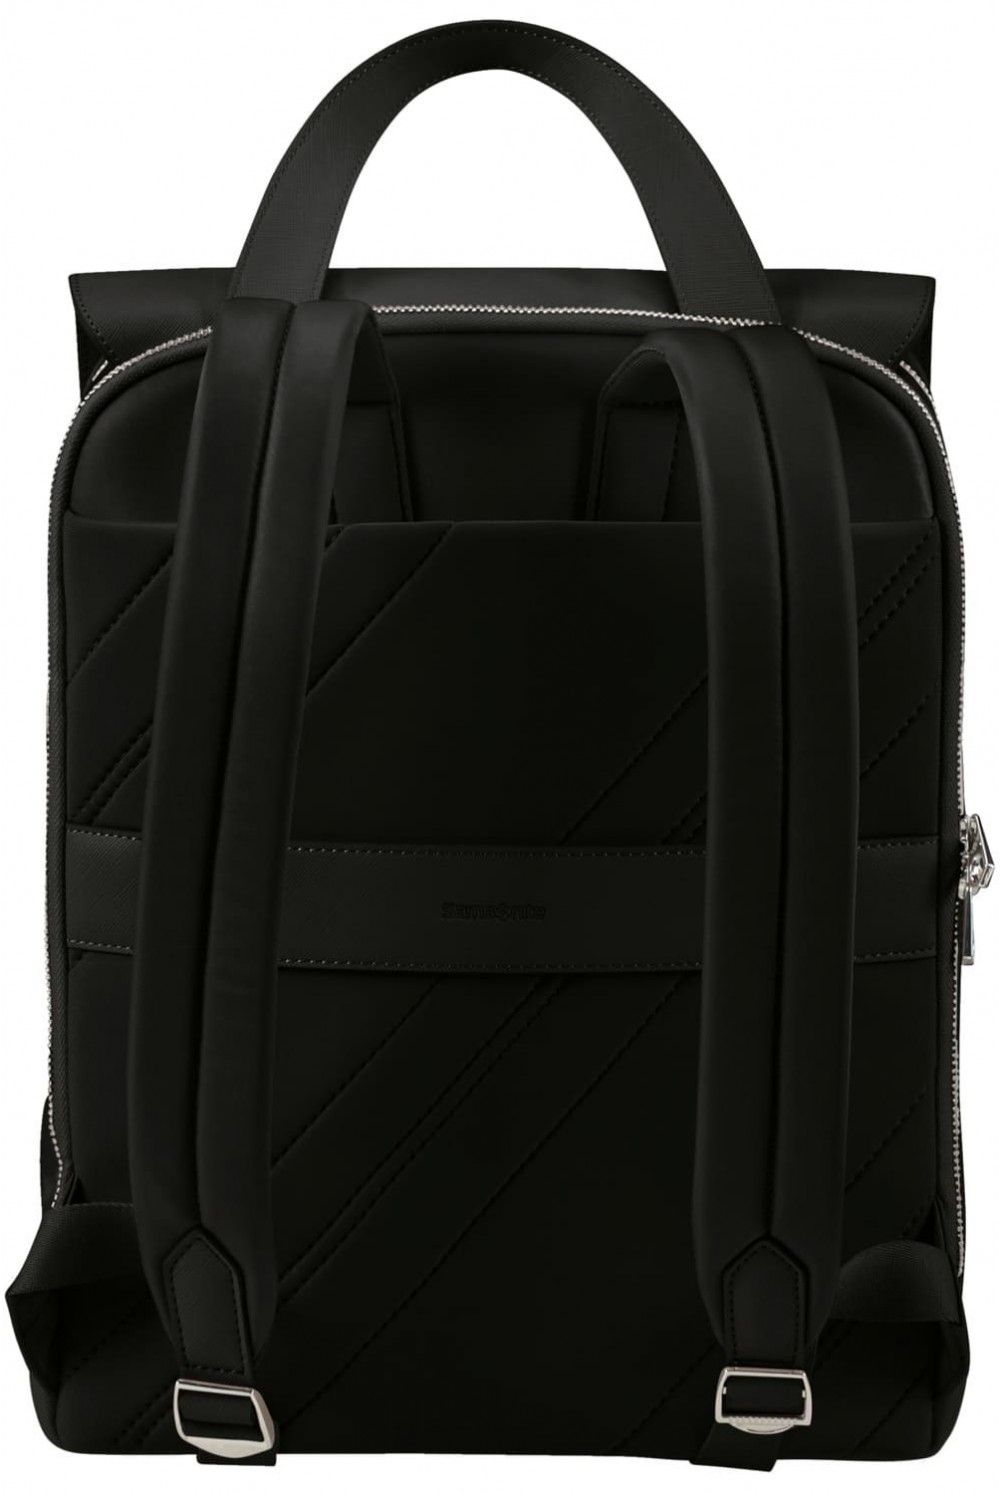 Laptop backpack Samsonite Zalia 2 14.1 inches 129431